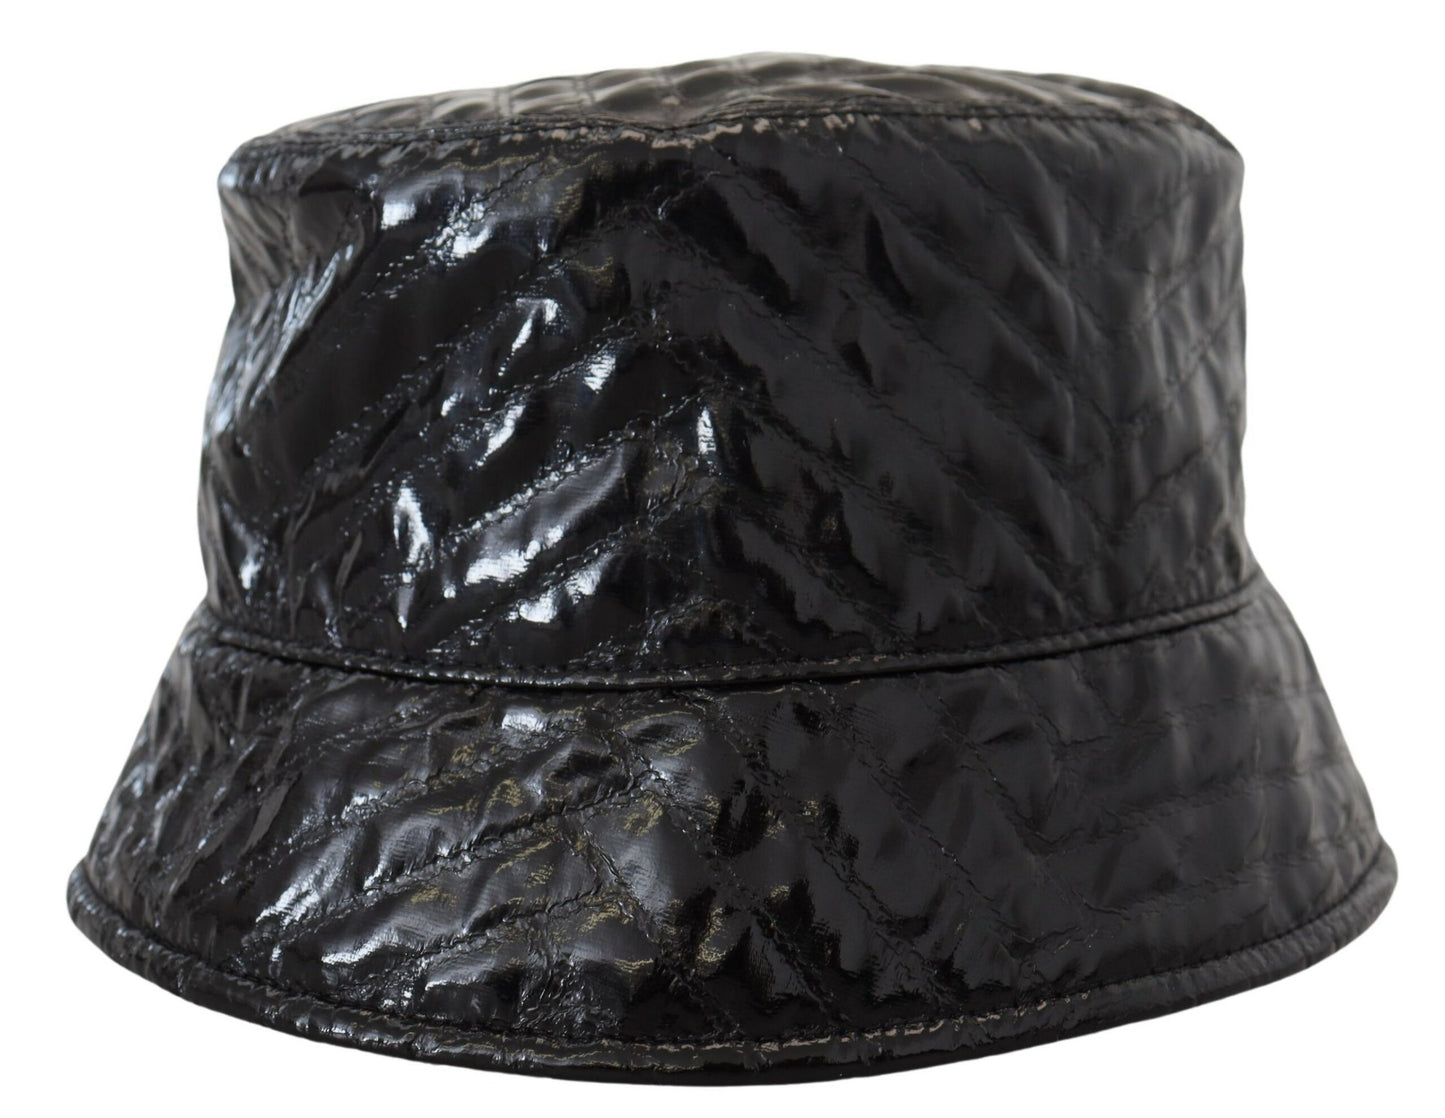 Dolce & Gabbana Elegant Black Bucket Cap